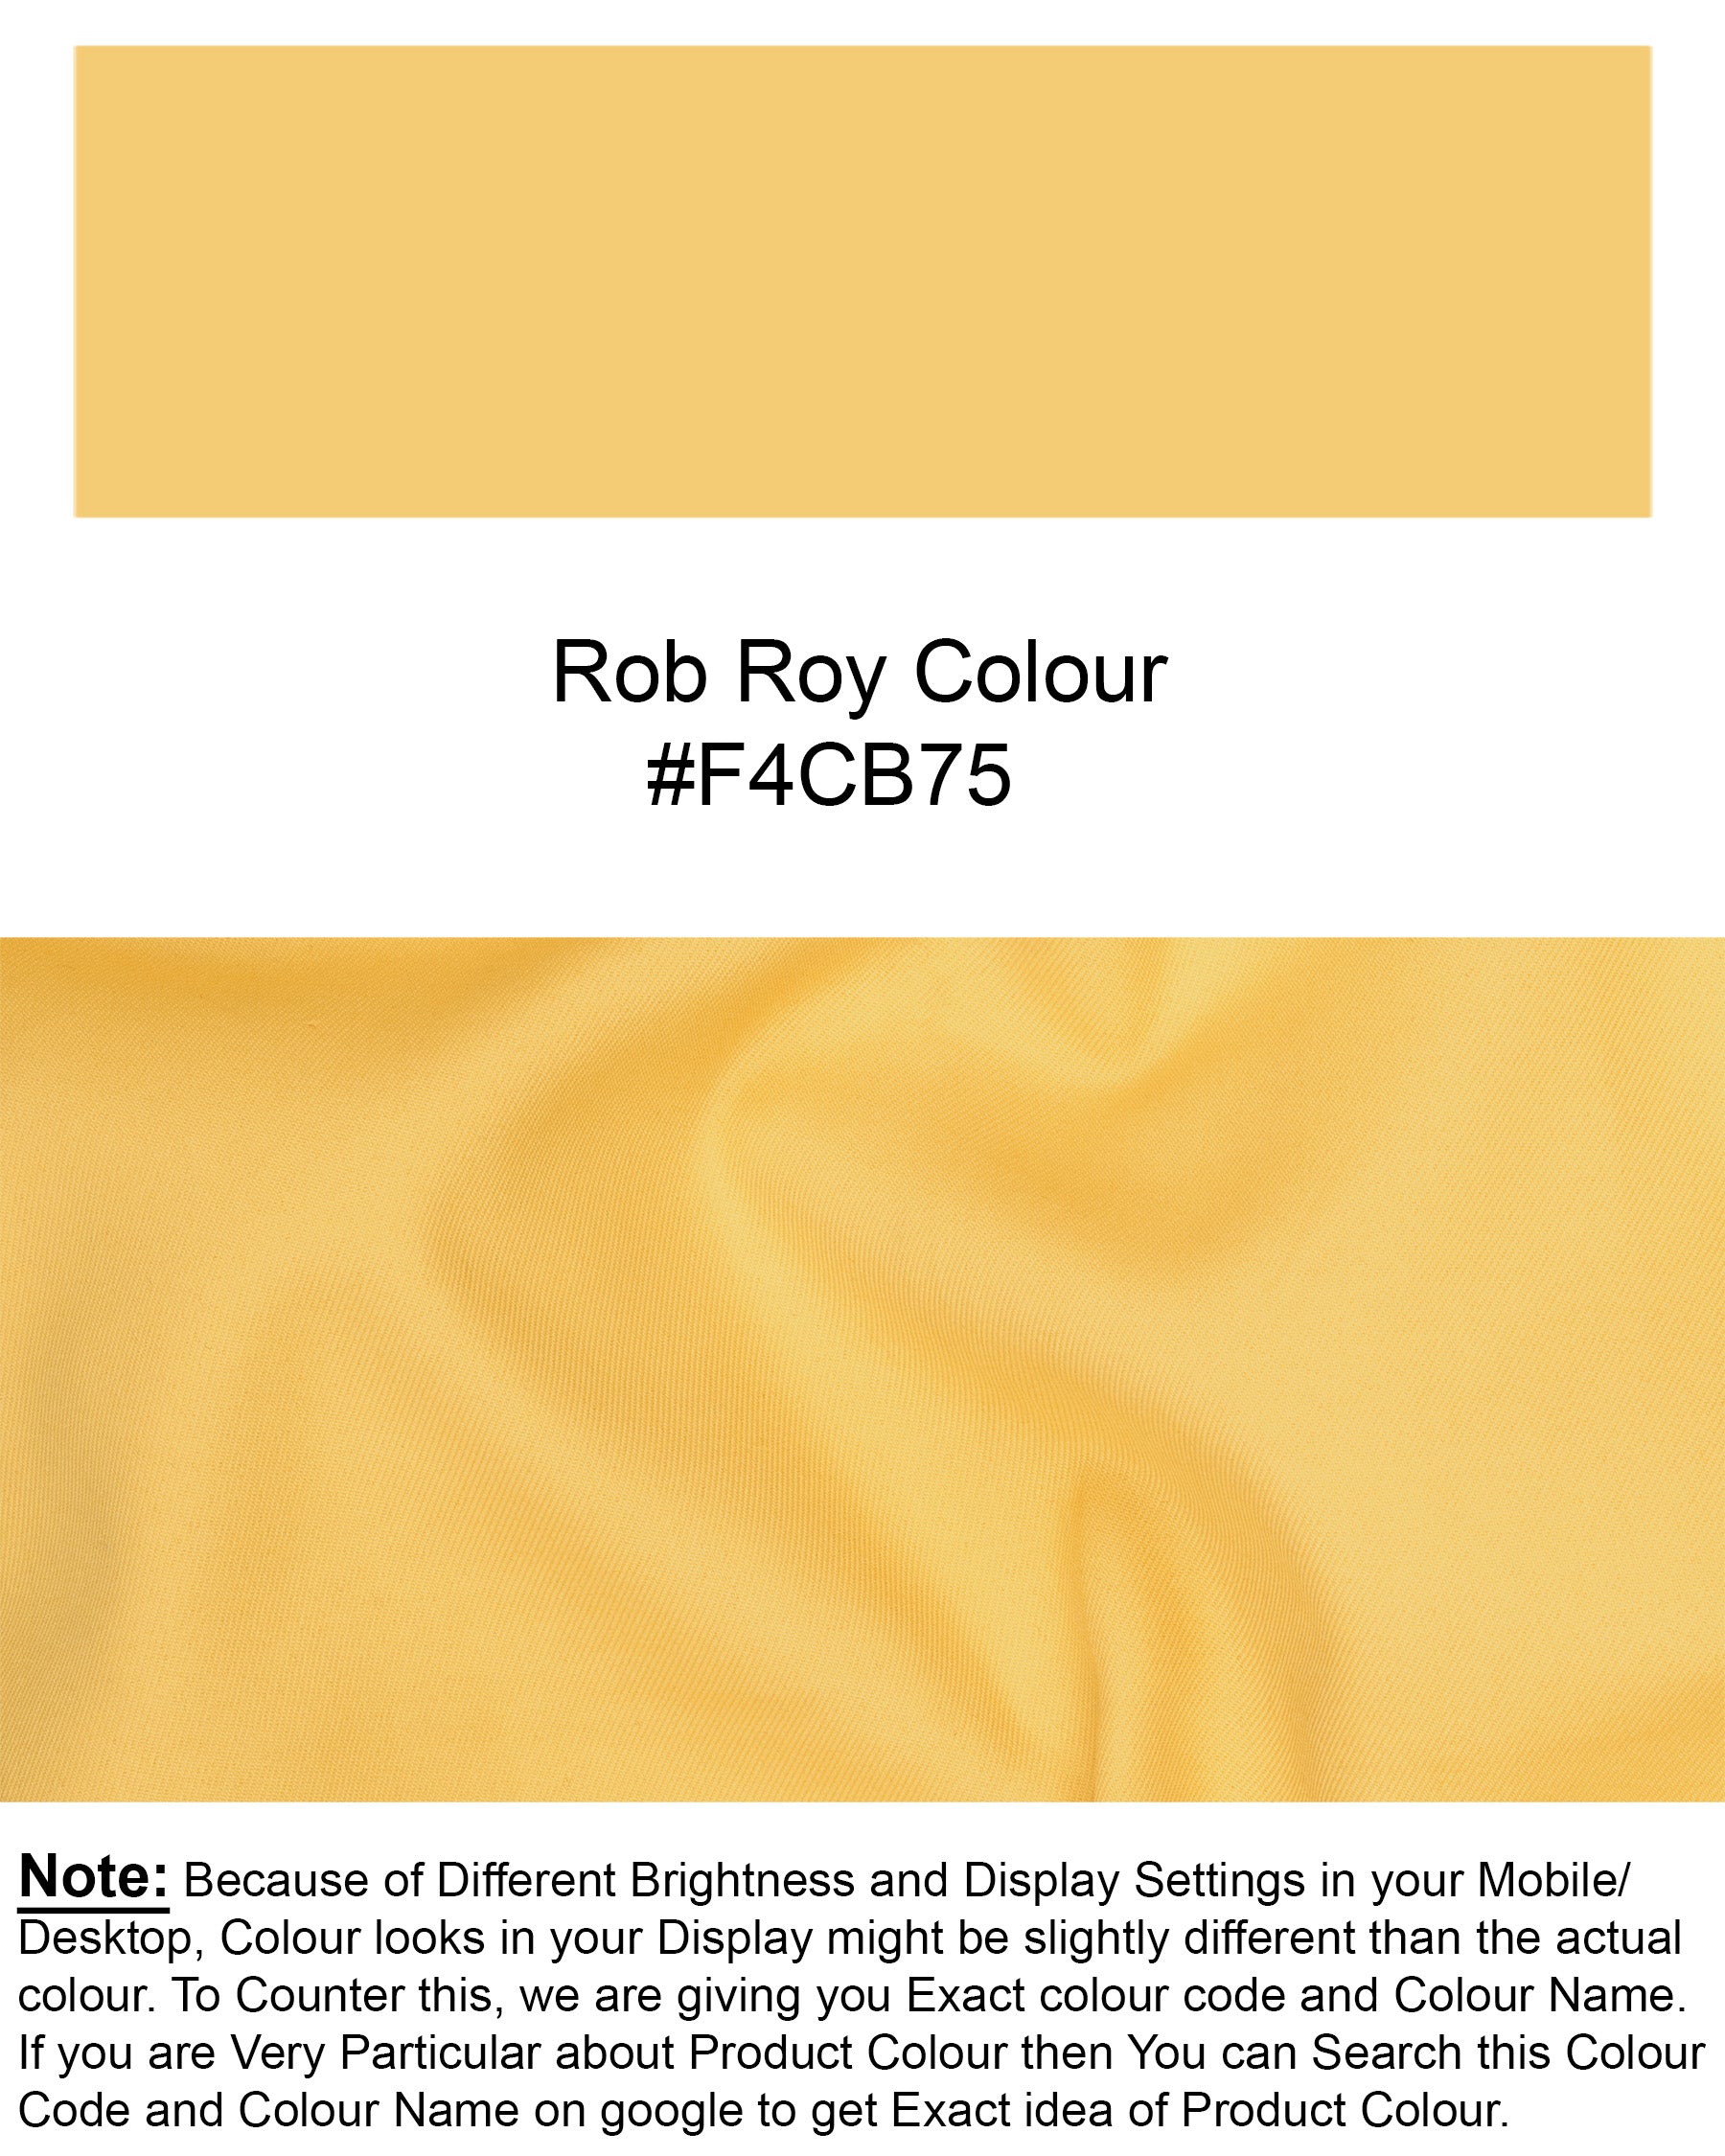 Rob Roy Yellow Bandhgala Sports Suit ST1854-BG-D41-36, ST1854-BG-D41-38, ST1854-BG-D41-40, ST1854-BG-D41-42, ST1854-BG-D41-44, ST1854-BG-D41-46, ST1854-BG-D41-48, ST1854-BG-D41-50, ST1854-BG-D41-52, ST1854-BG-D41-54, ST1854-BG-D41-56, ST1854-BG-D41-58, ST1854-BG-D41-60